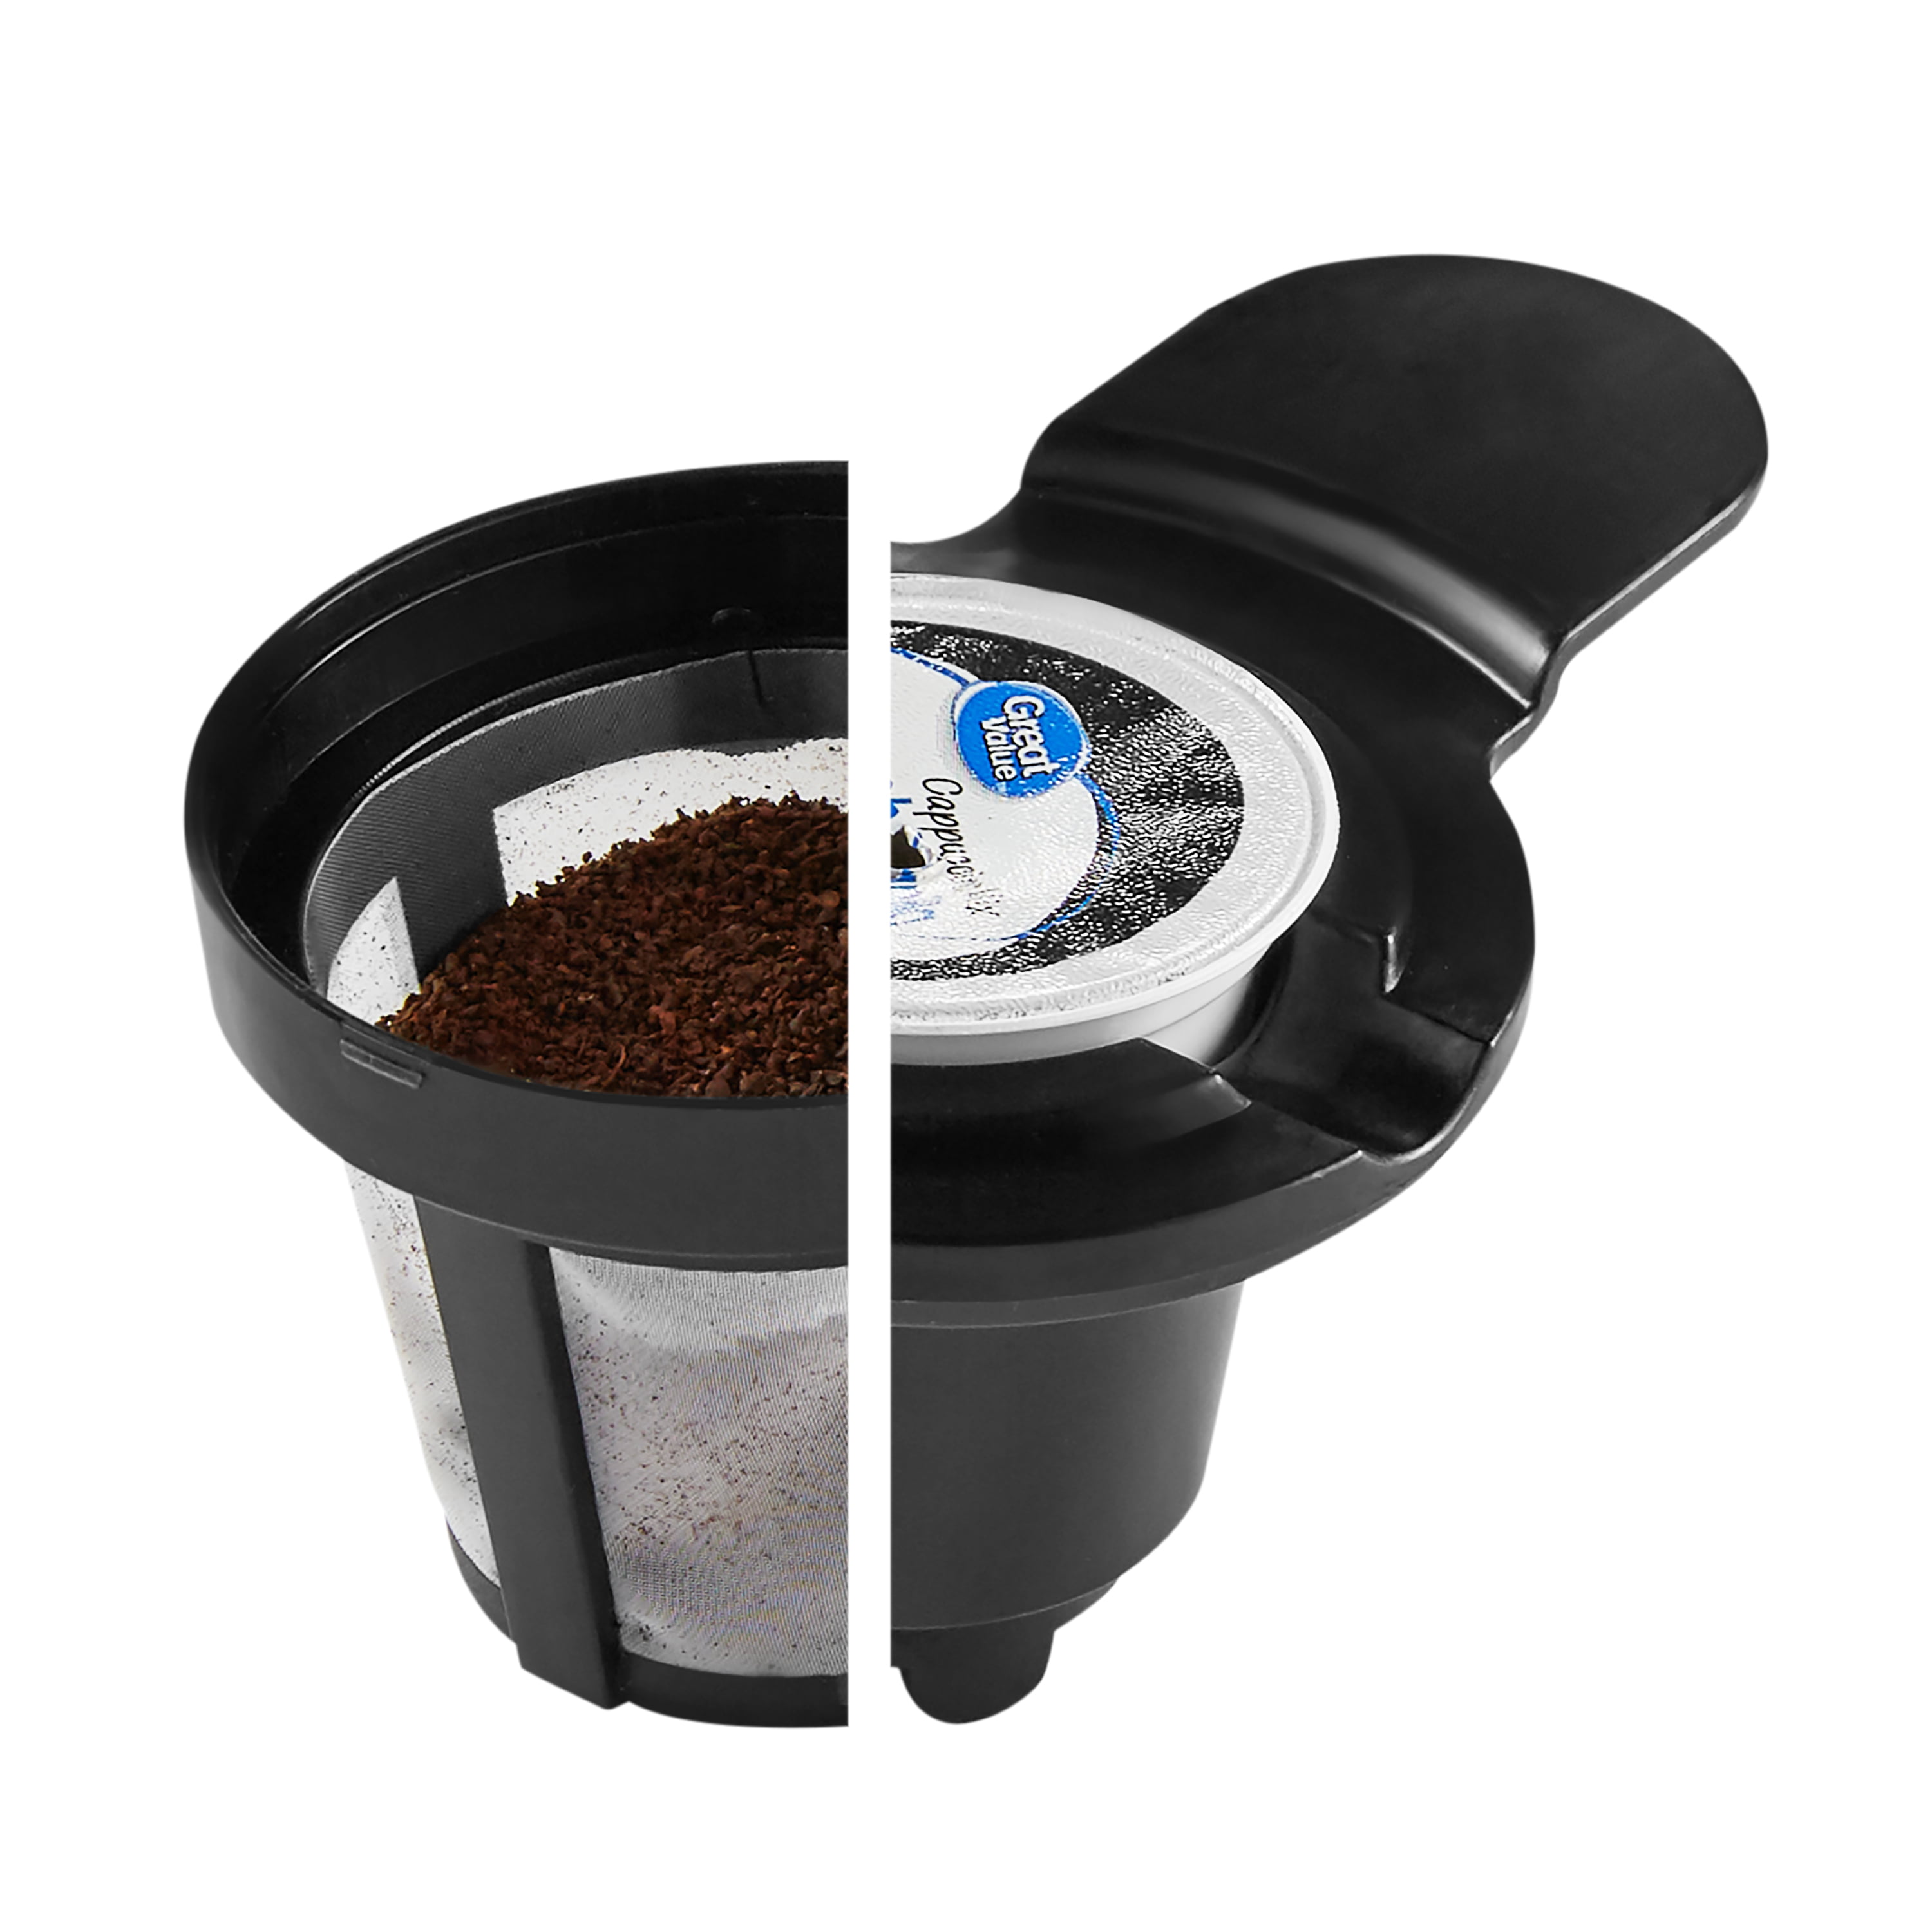 farberware coffee maker percolator thermostat fix repair 